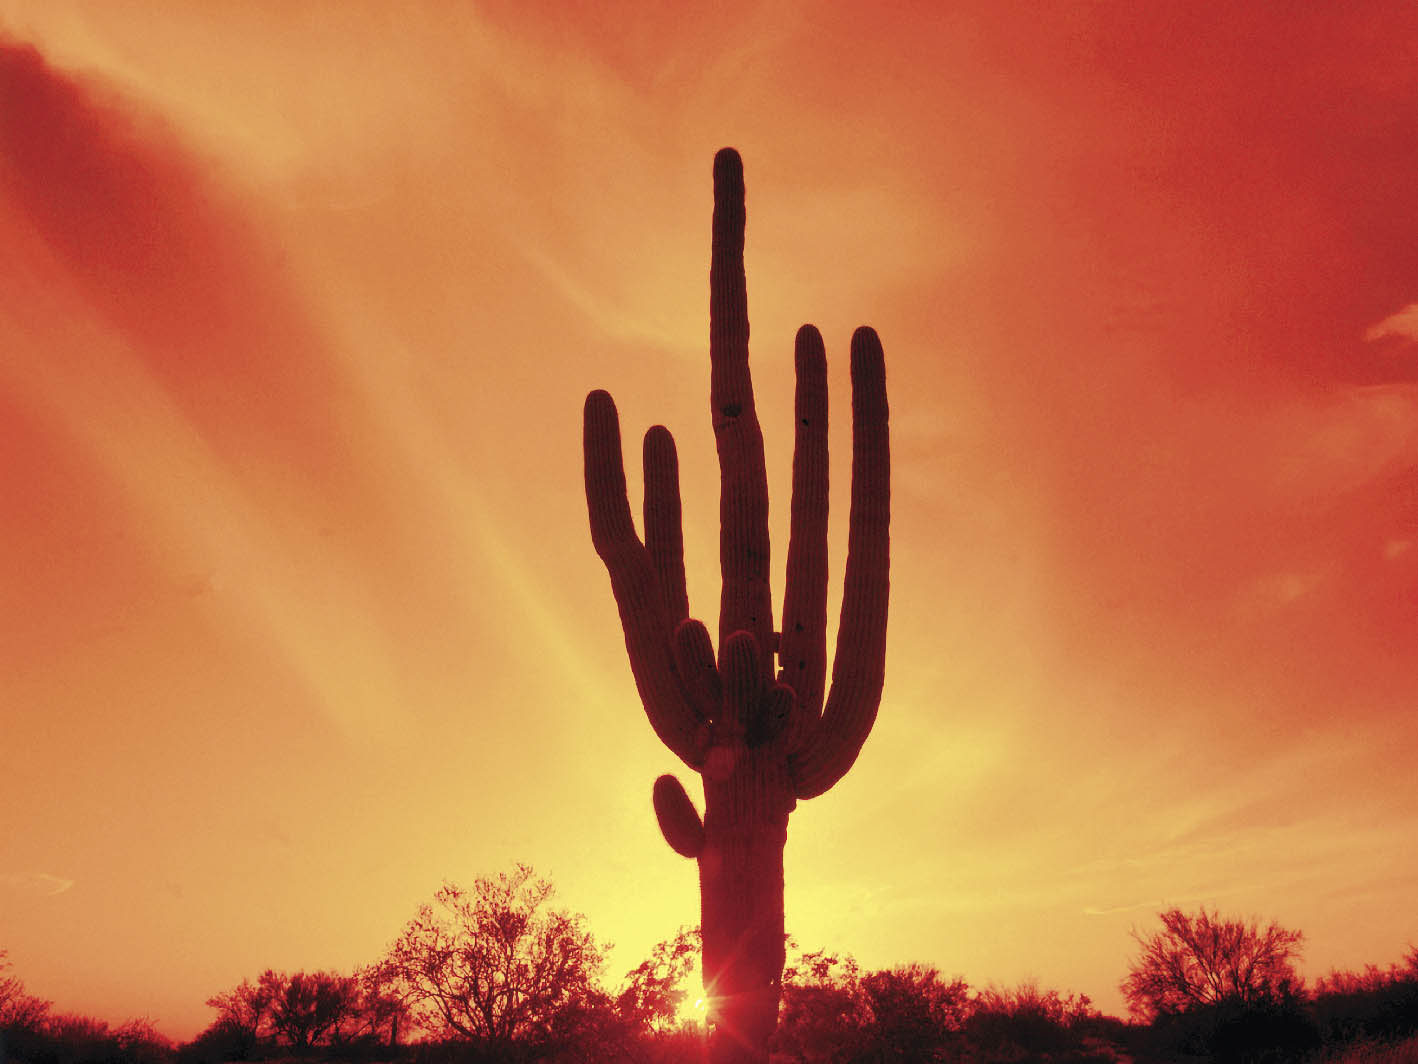 Ein großer Kaktus im Abendrot des Himmels 